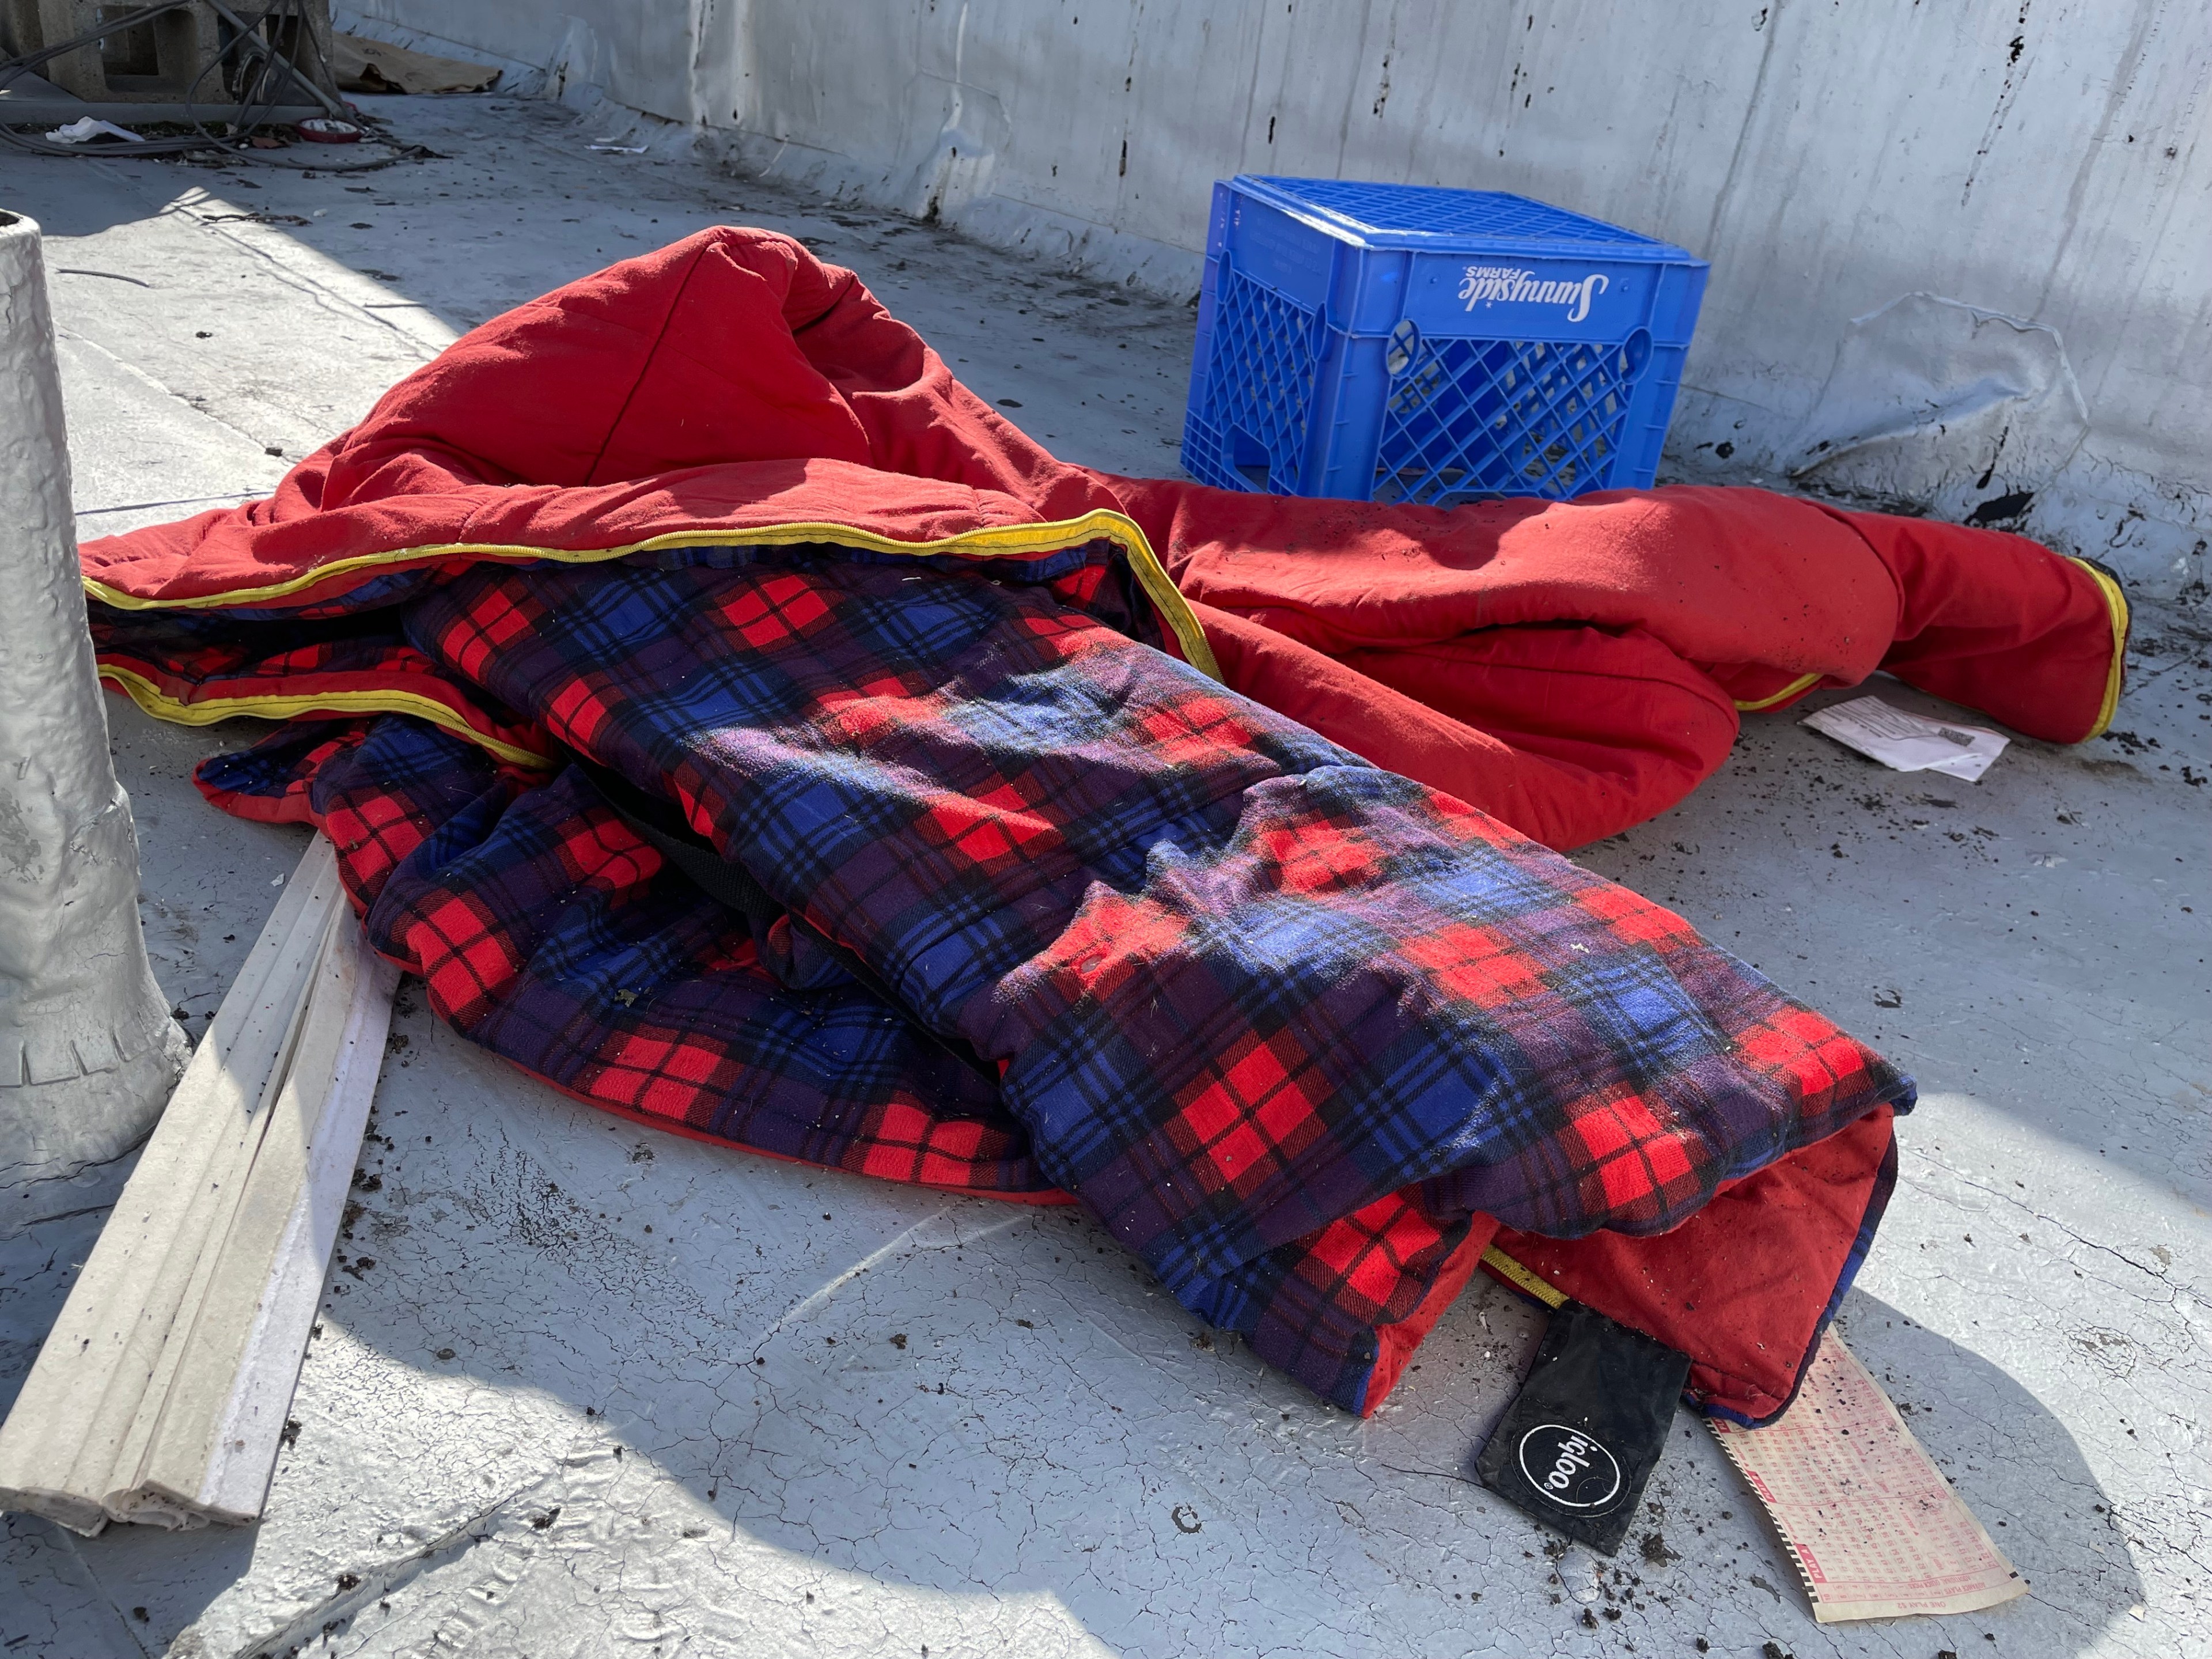 A red sleeping bag is seen on the floor.